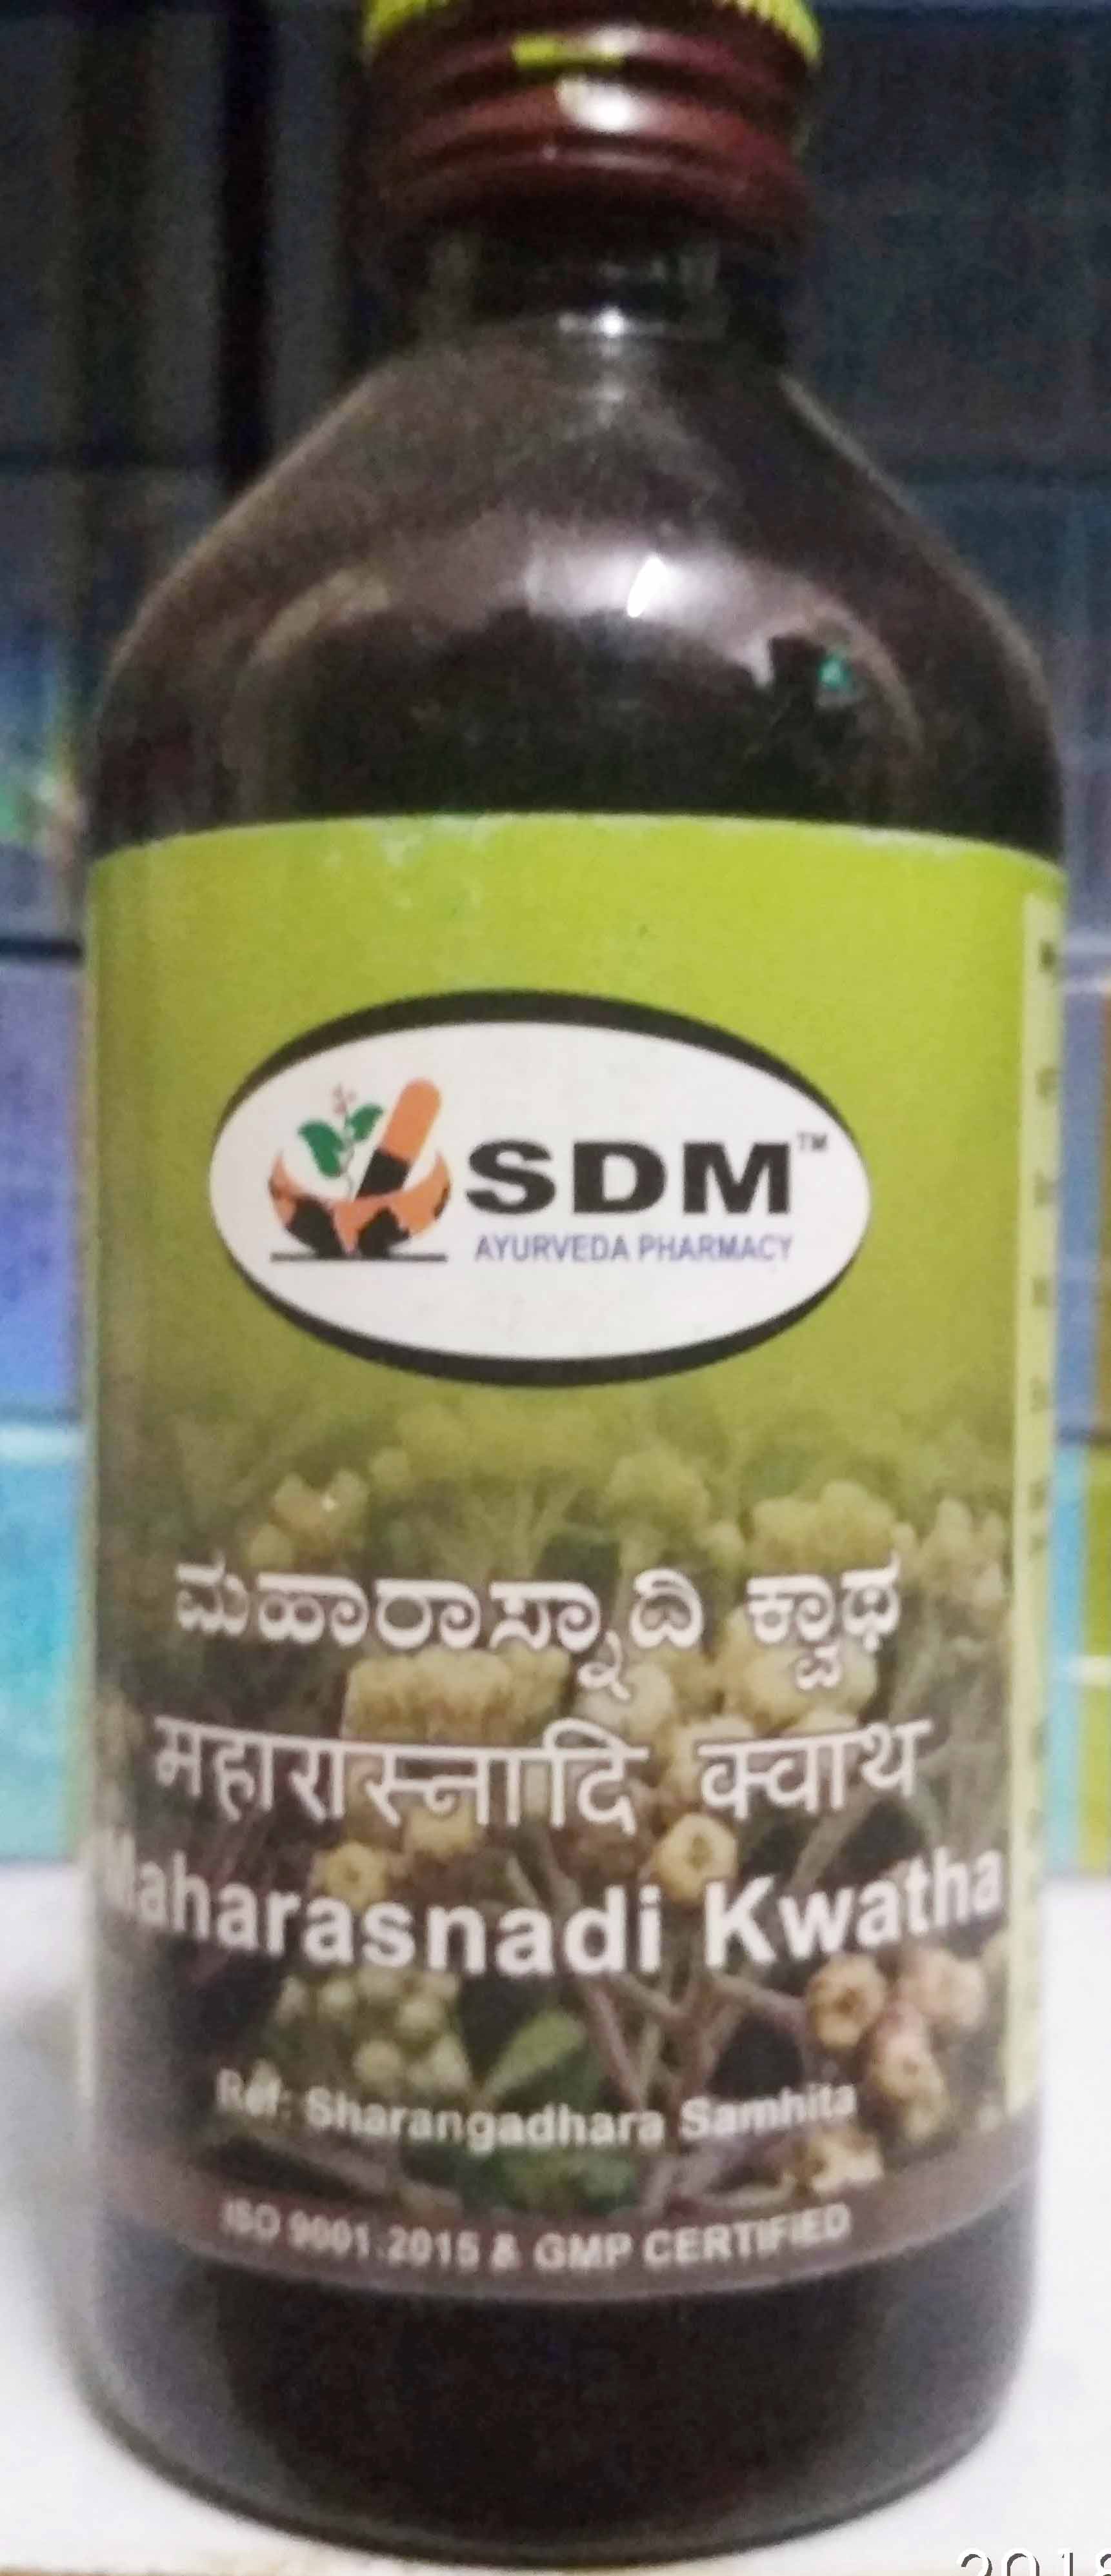 maharasnadi kwatha 450ml upto 15% off sdm ayurvedya